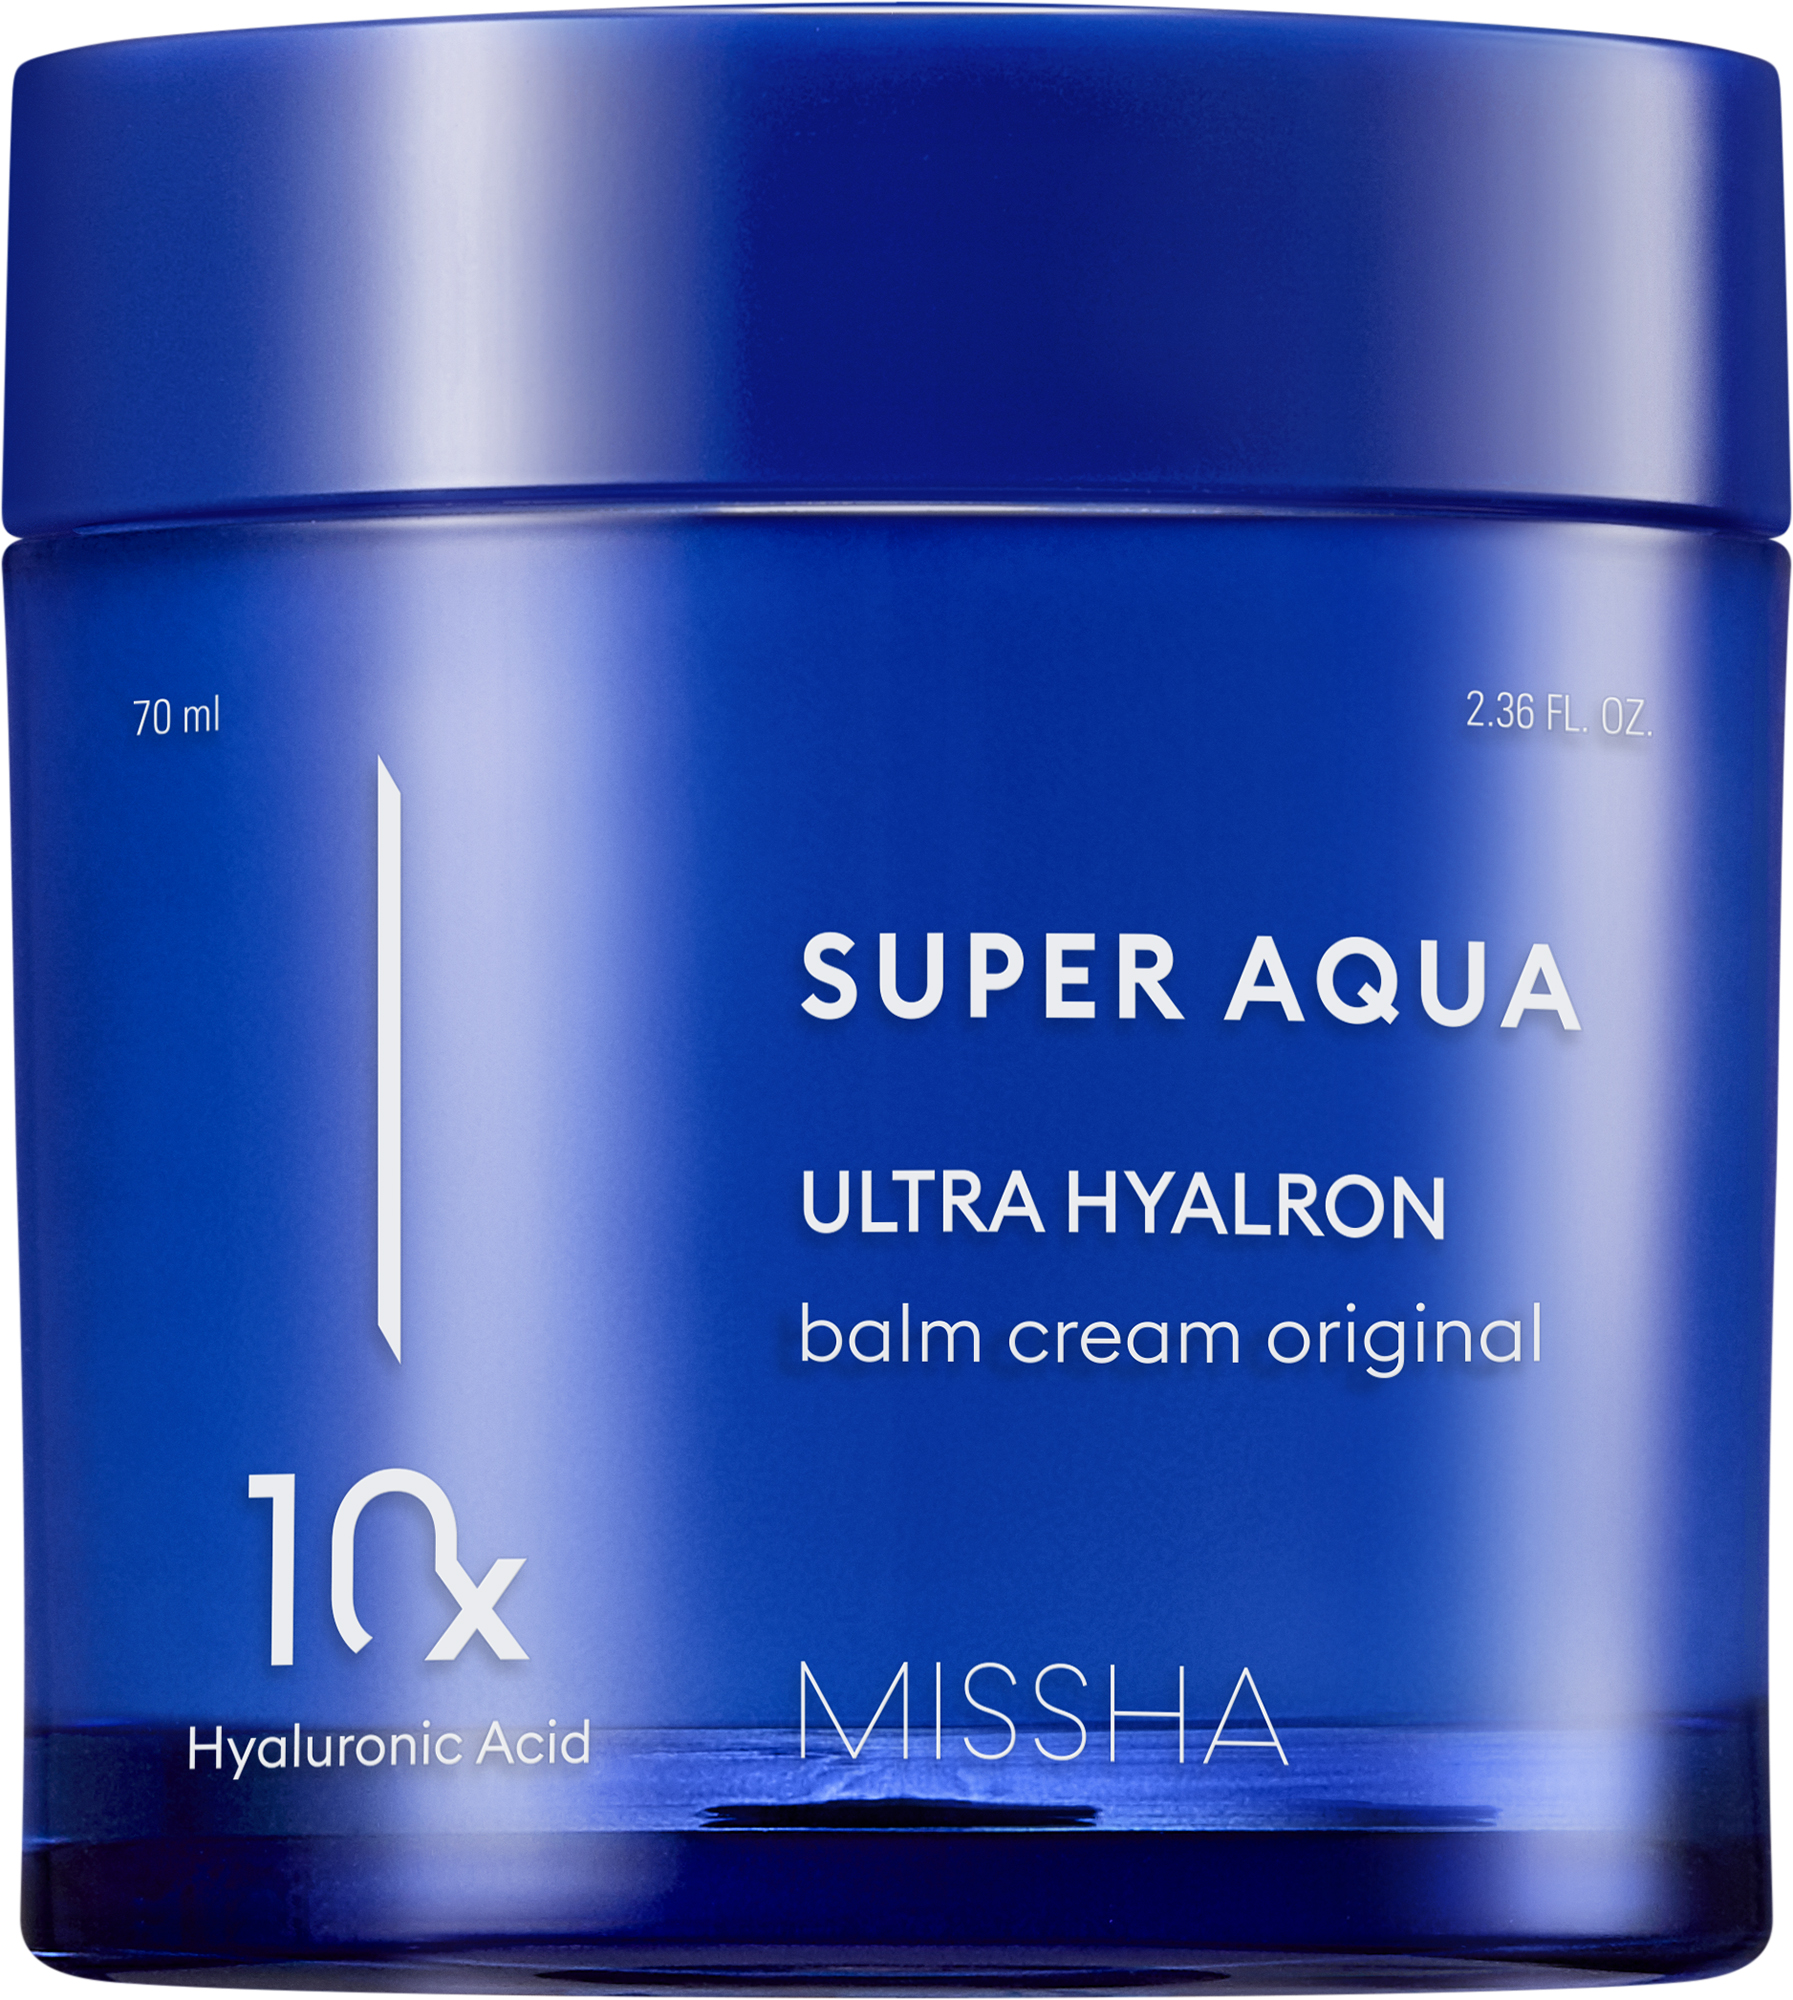 MISSHA Super Aqua Ultra Hyalron Balm Cream 70 ml | lyko.com